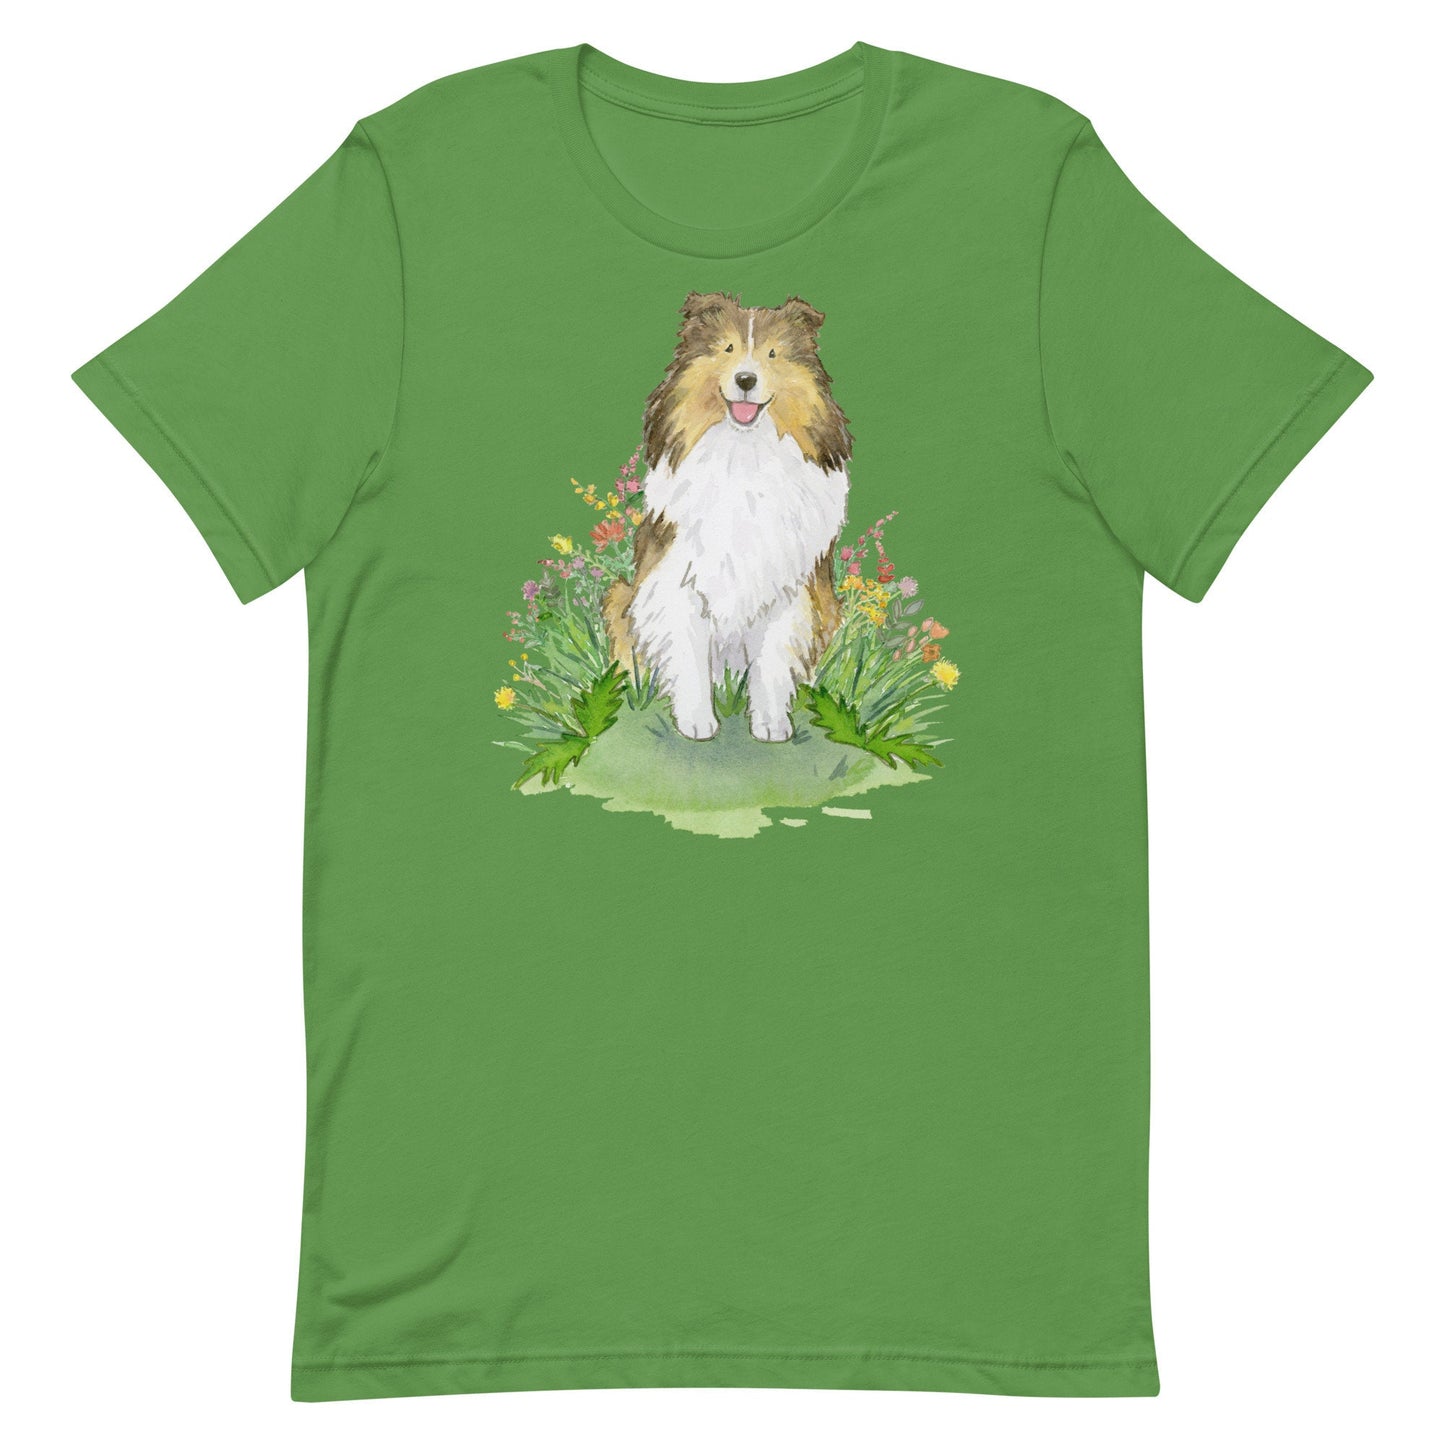 Cute t-shirt with sable shetland sheepdog artwork on it.